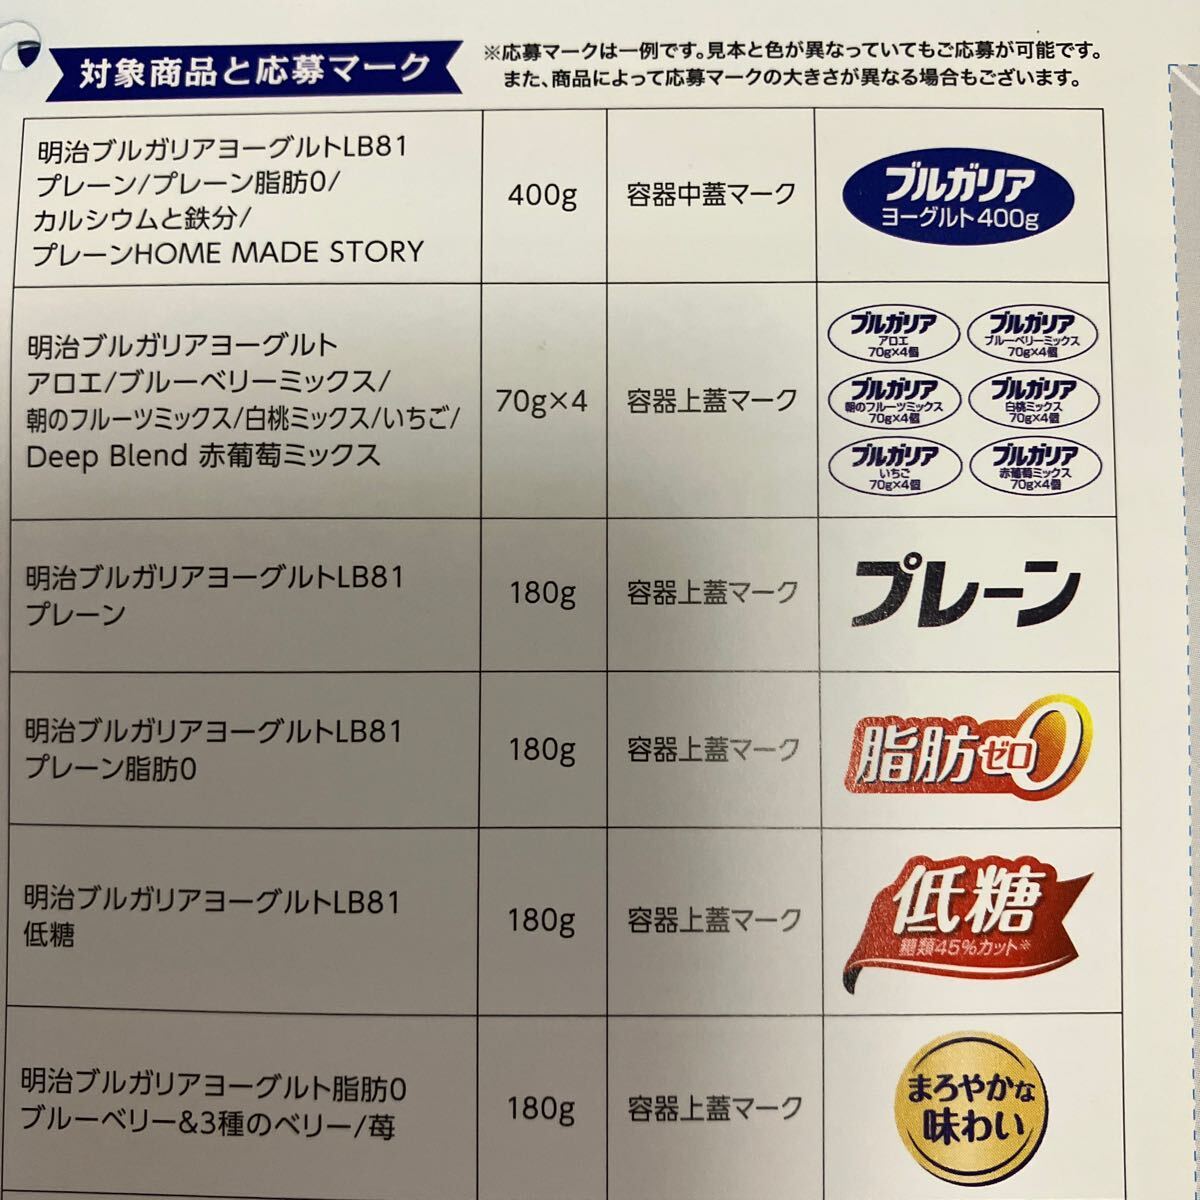  Meiji yoghurt dream . magic. campaign Disney prize fantasy springs s application Mark 24 sheets 